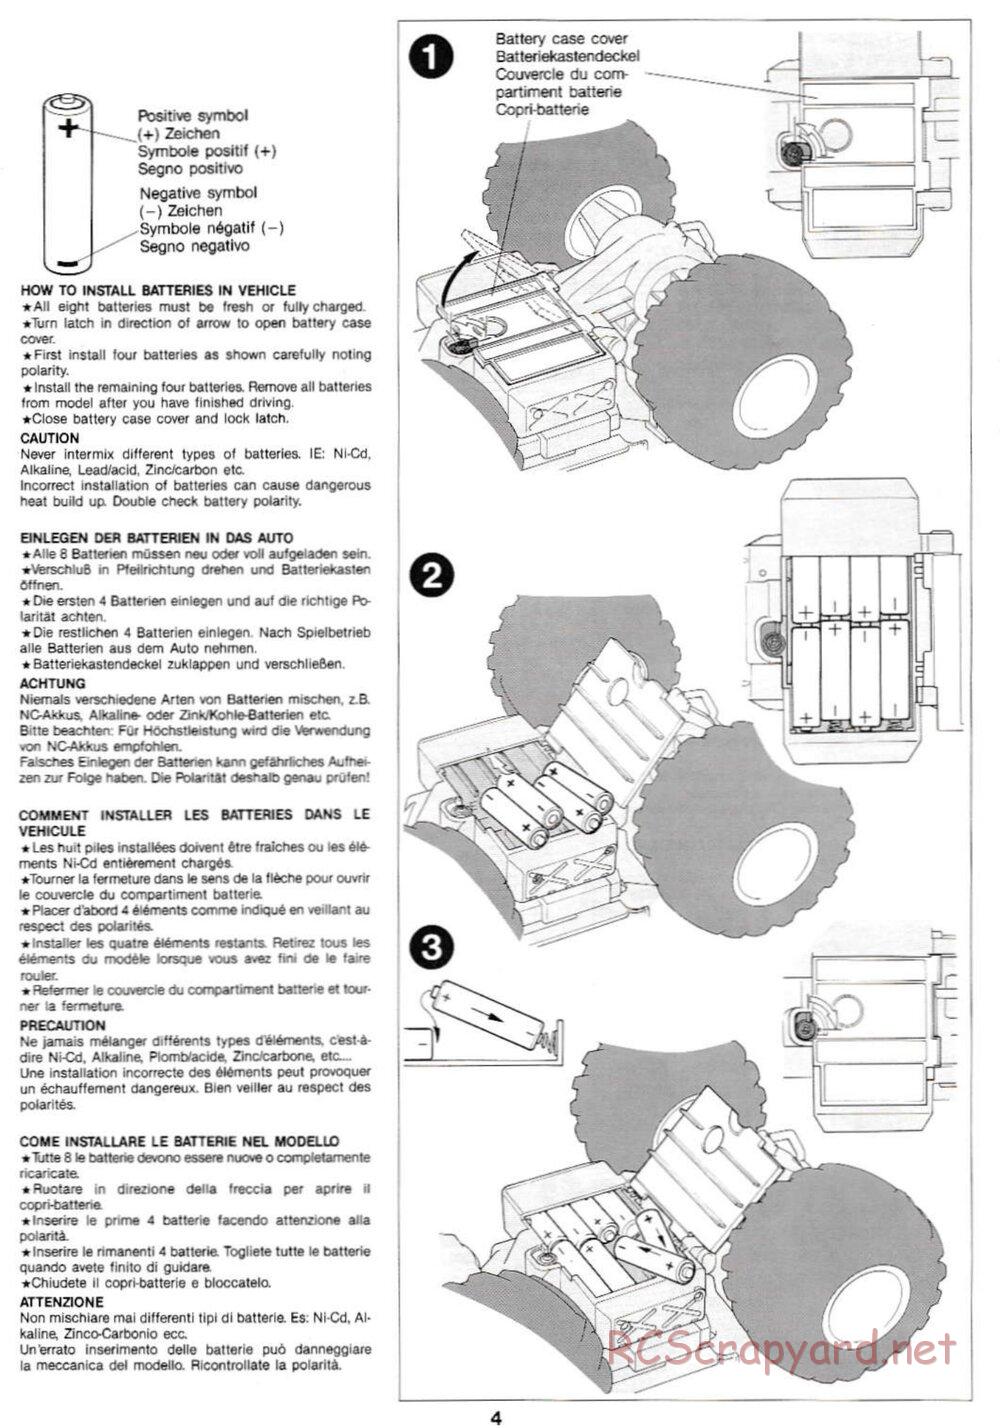 Tamiya - Midnight Pumpkin QD Chassis - Manual - Page 4